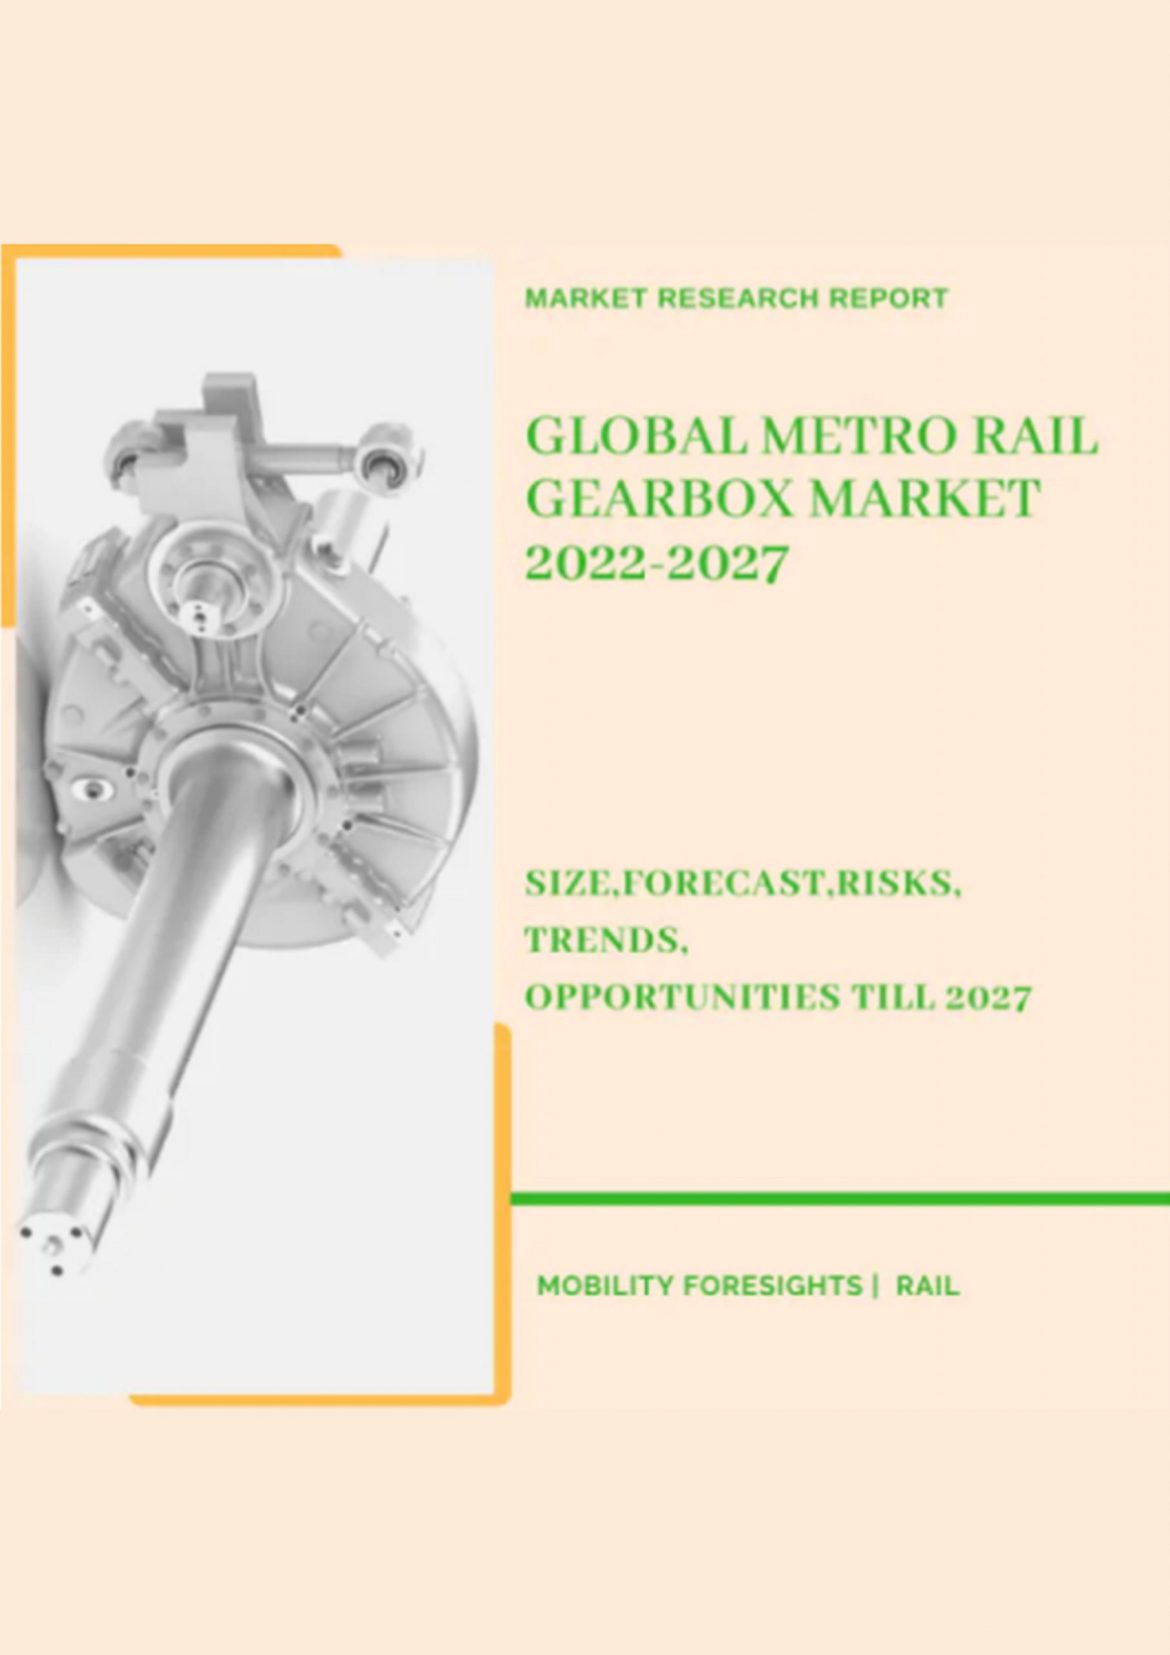 Global Metro Rail Gearbox Market 2022-2027